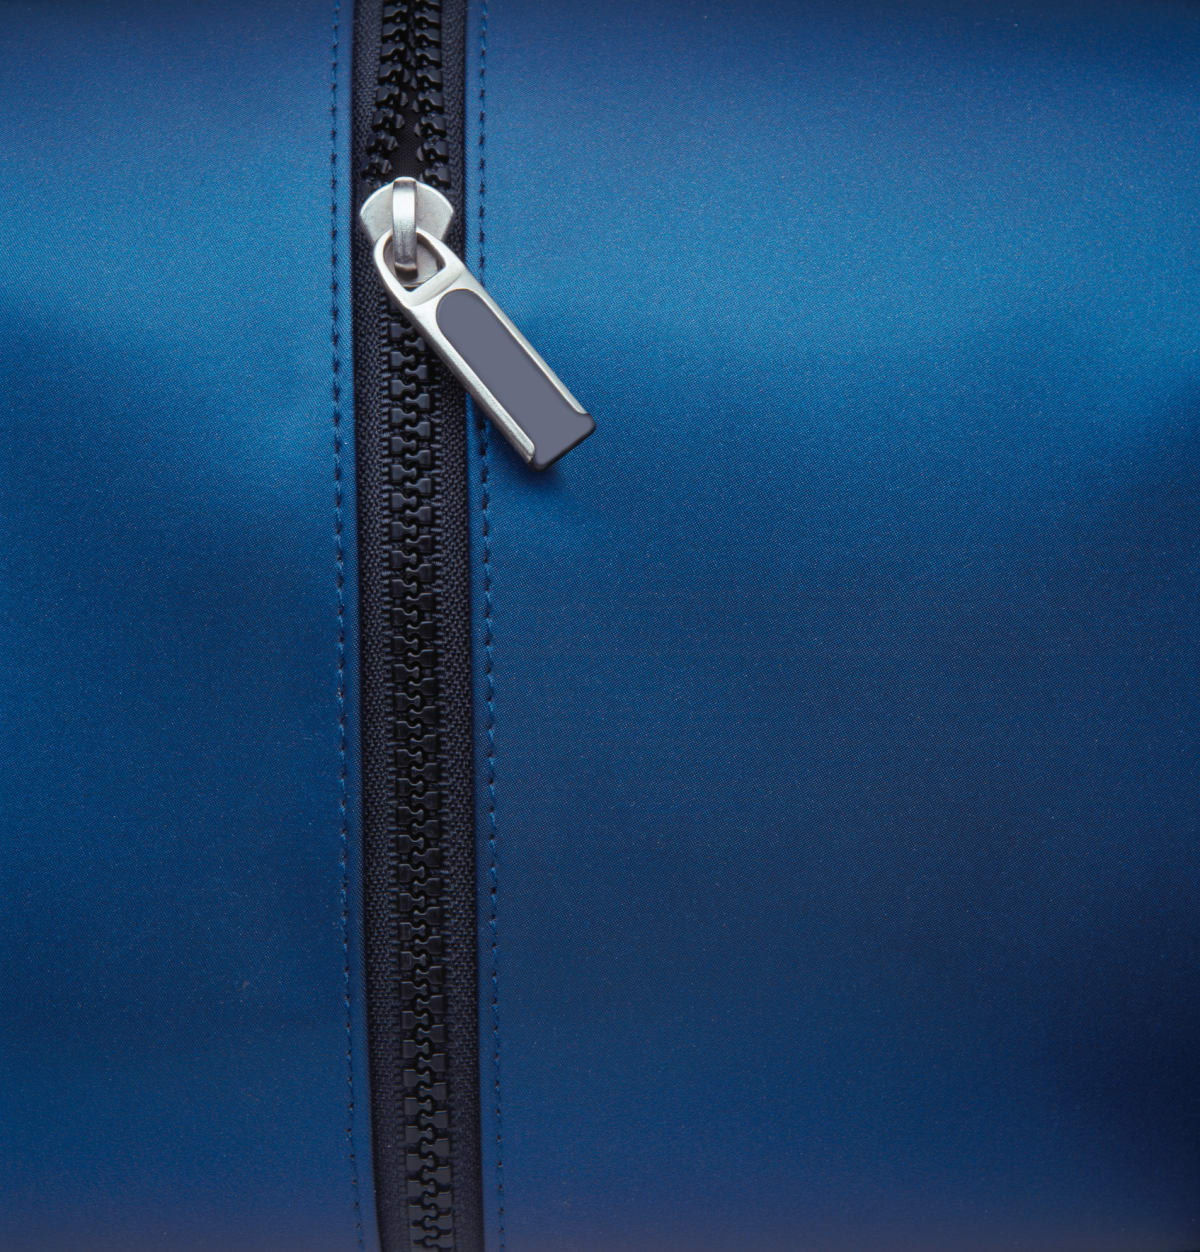 Closed zipper on a blue bag